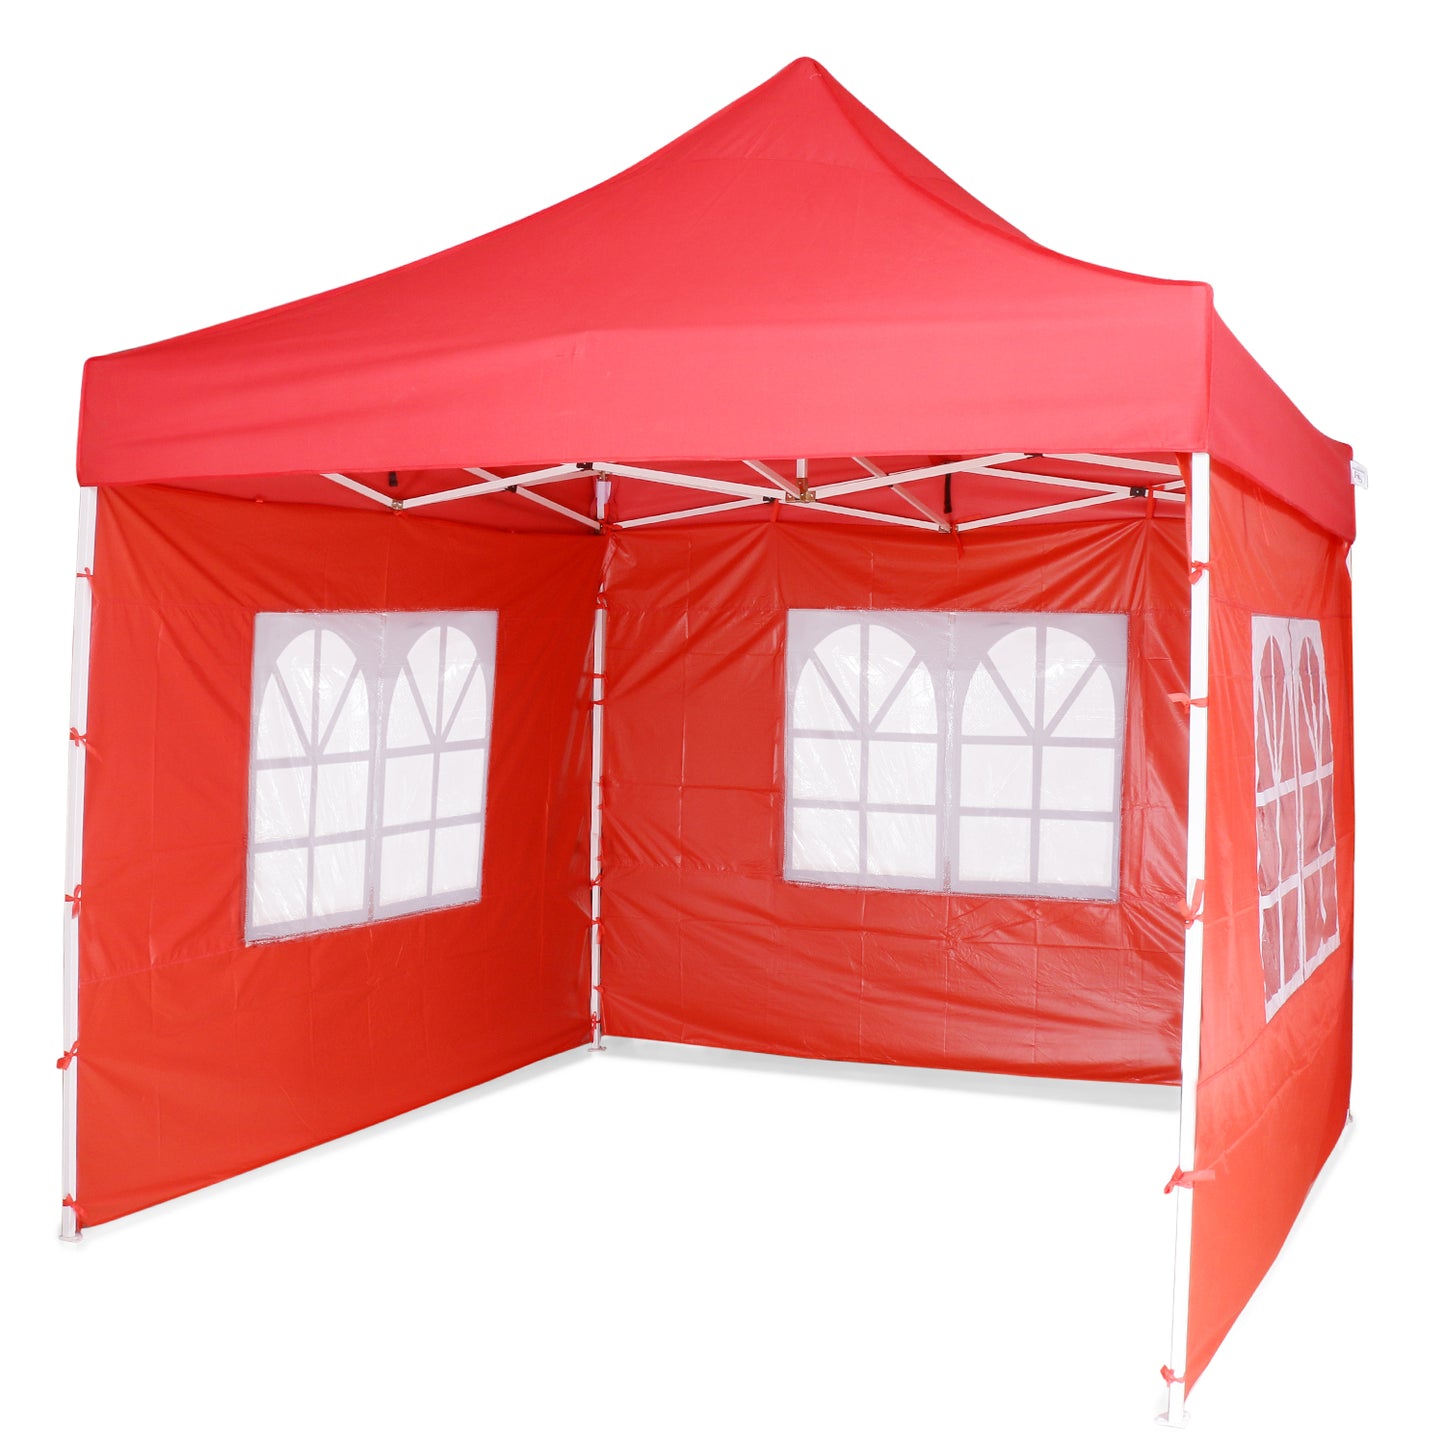 Gazebo Tent 10 x 10 feet with European side covers - Premium Quality